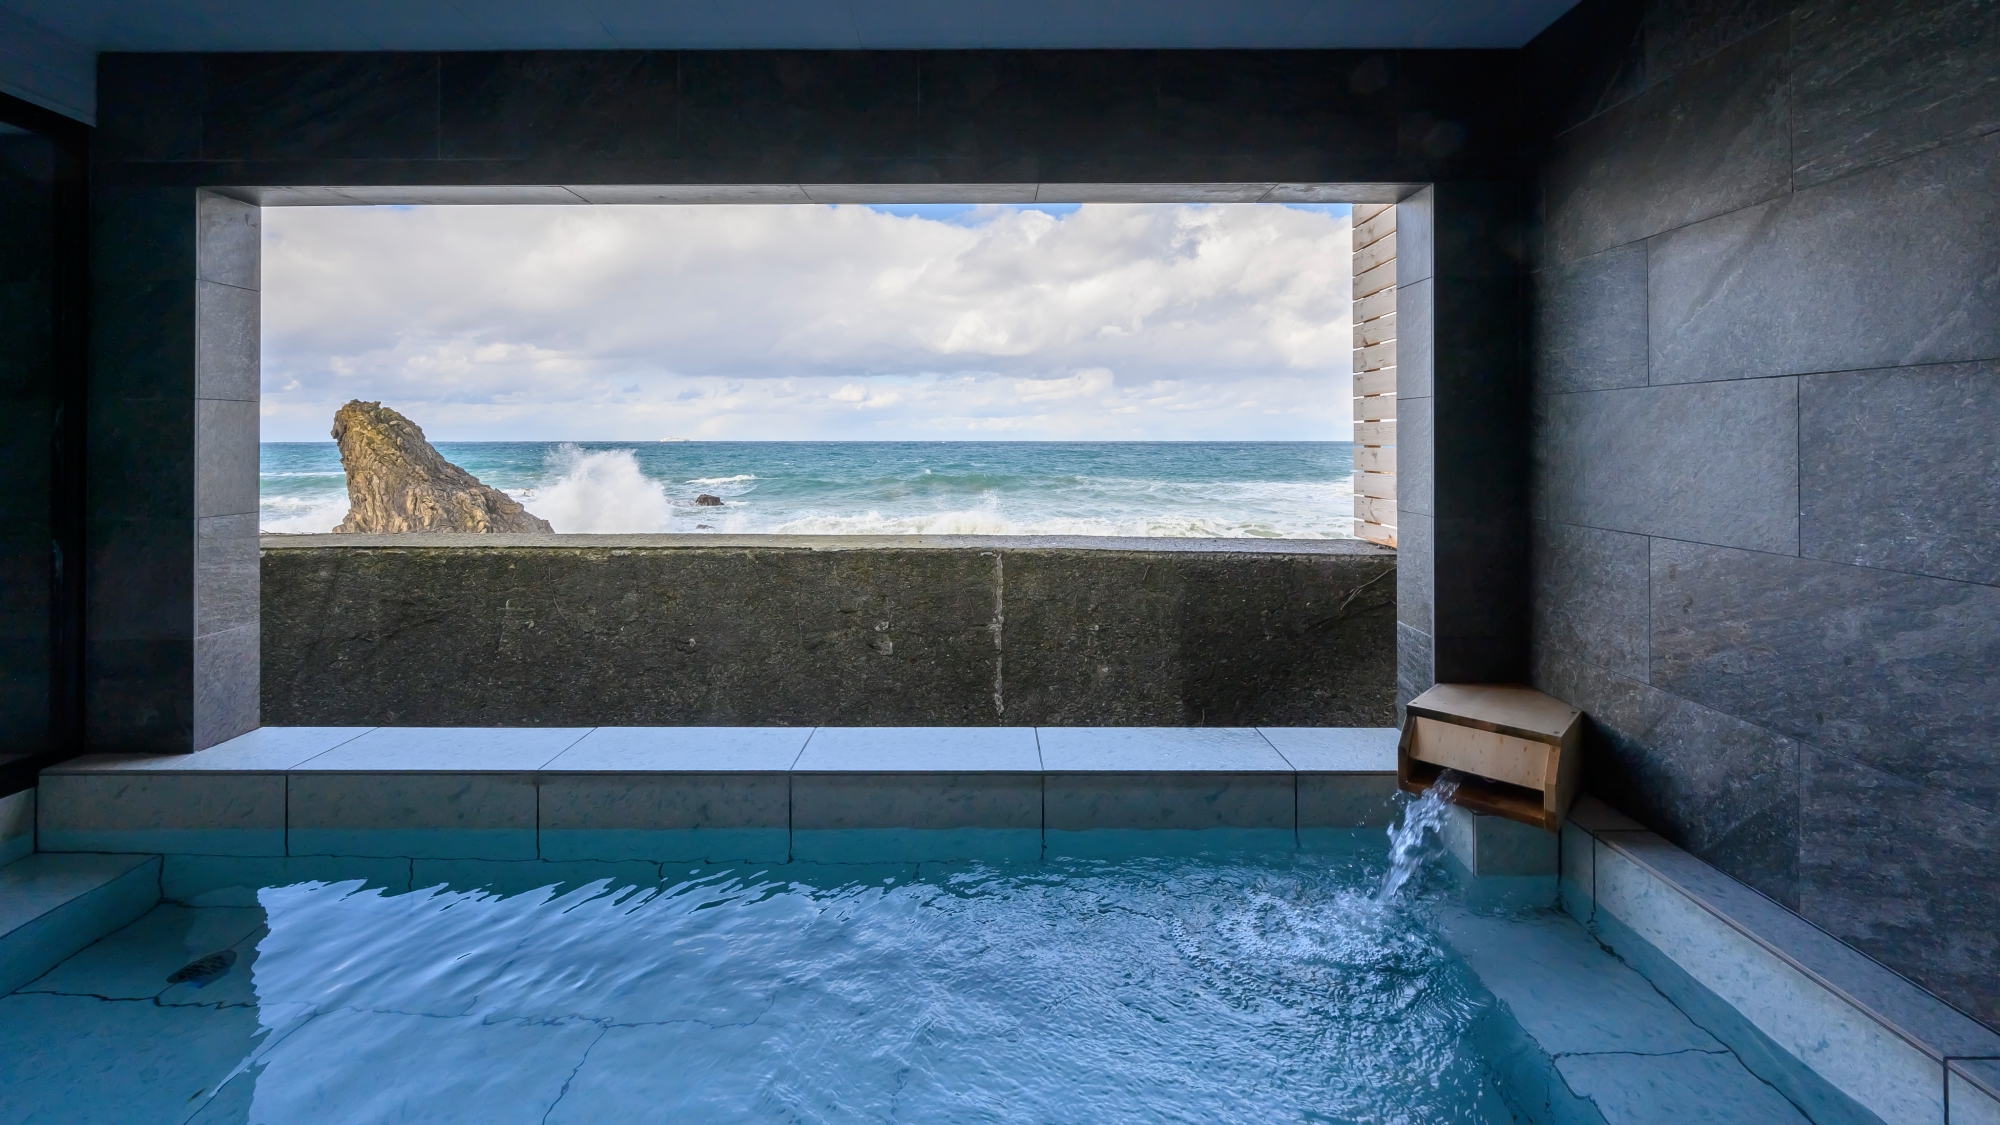 【New】リニューアル大浴場～美人の湯といわれる天然温泉をゆっくりとお楽しみ下さい～